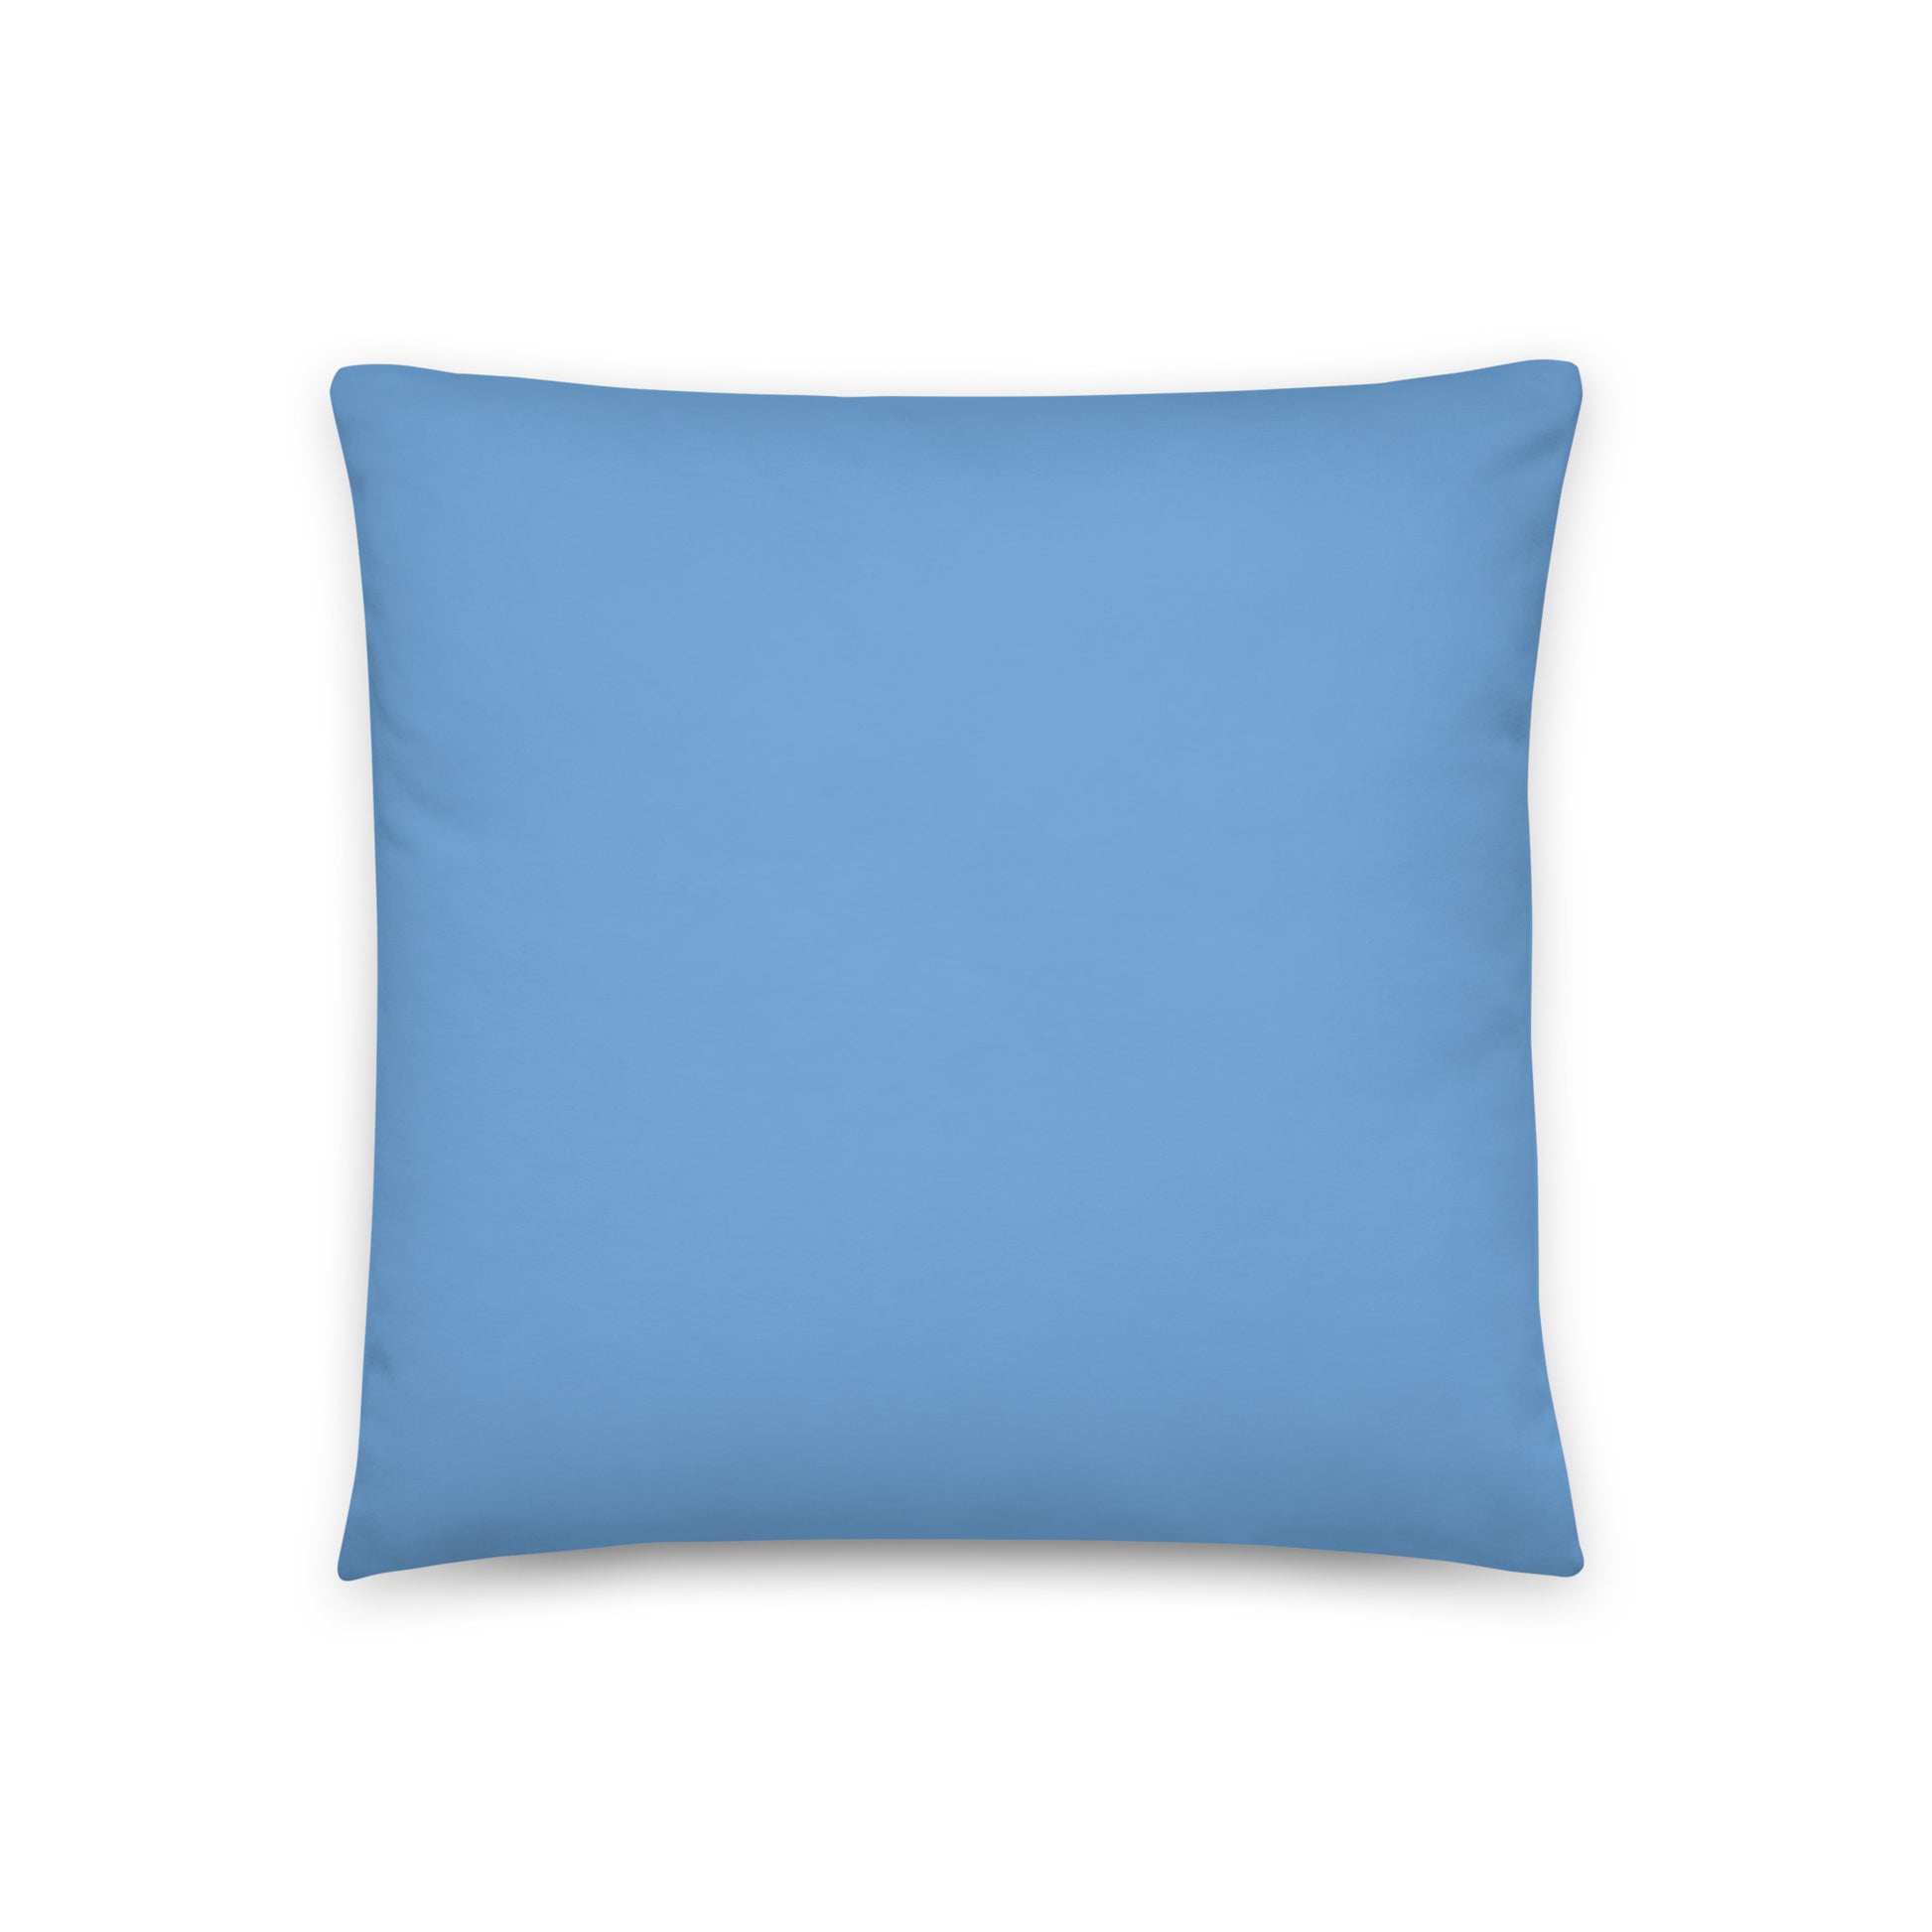 Blue Thistle Pillow - Art Love Decor